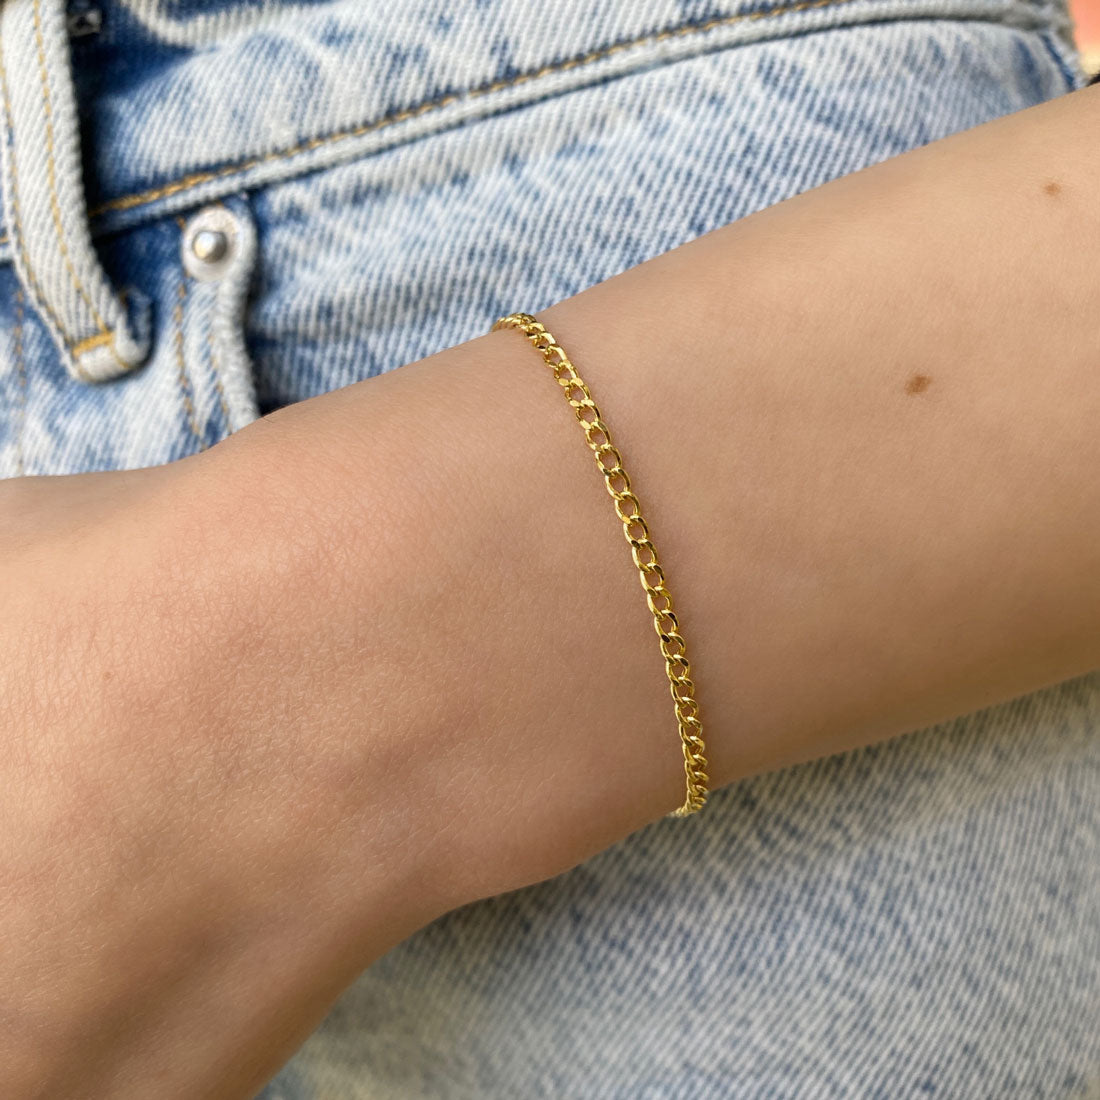 daily wear simple chain bracelet design | Bracelet designs, Hand bracelet, Chain  bracelet